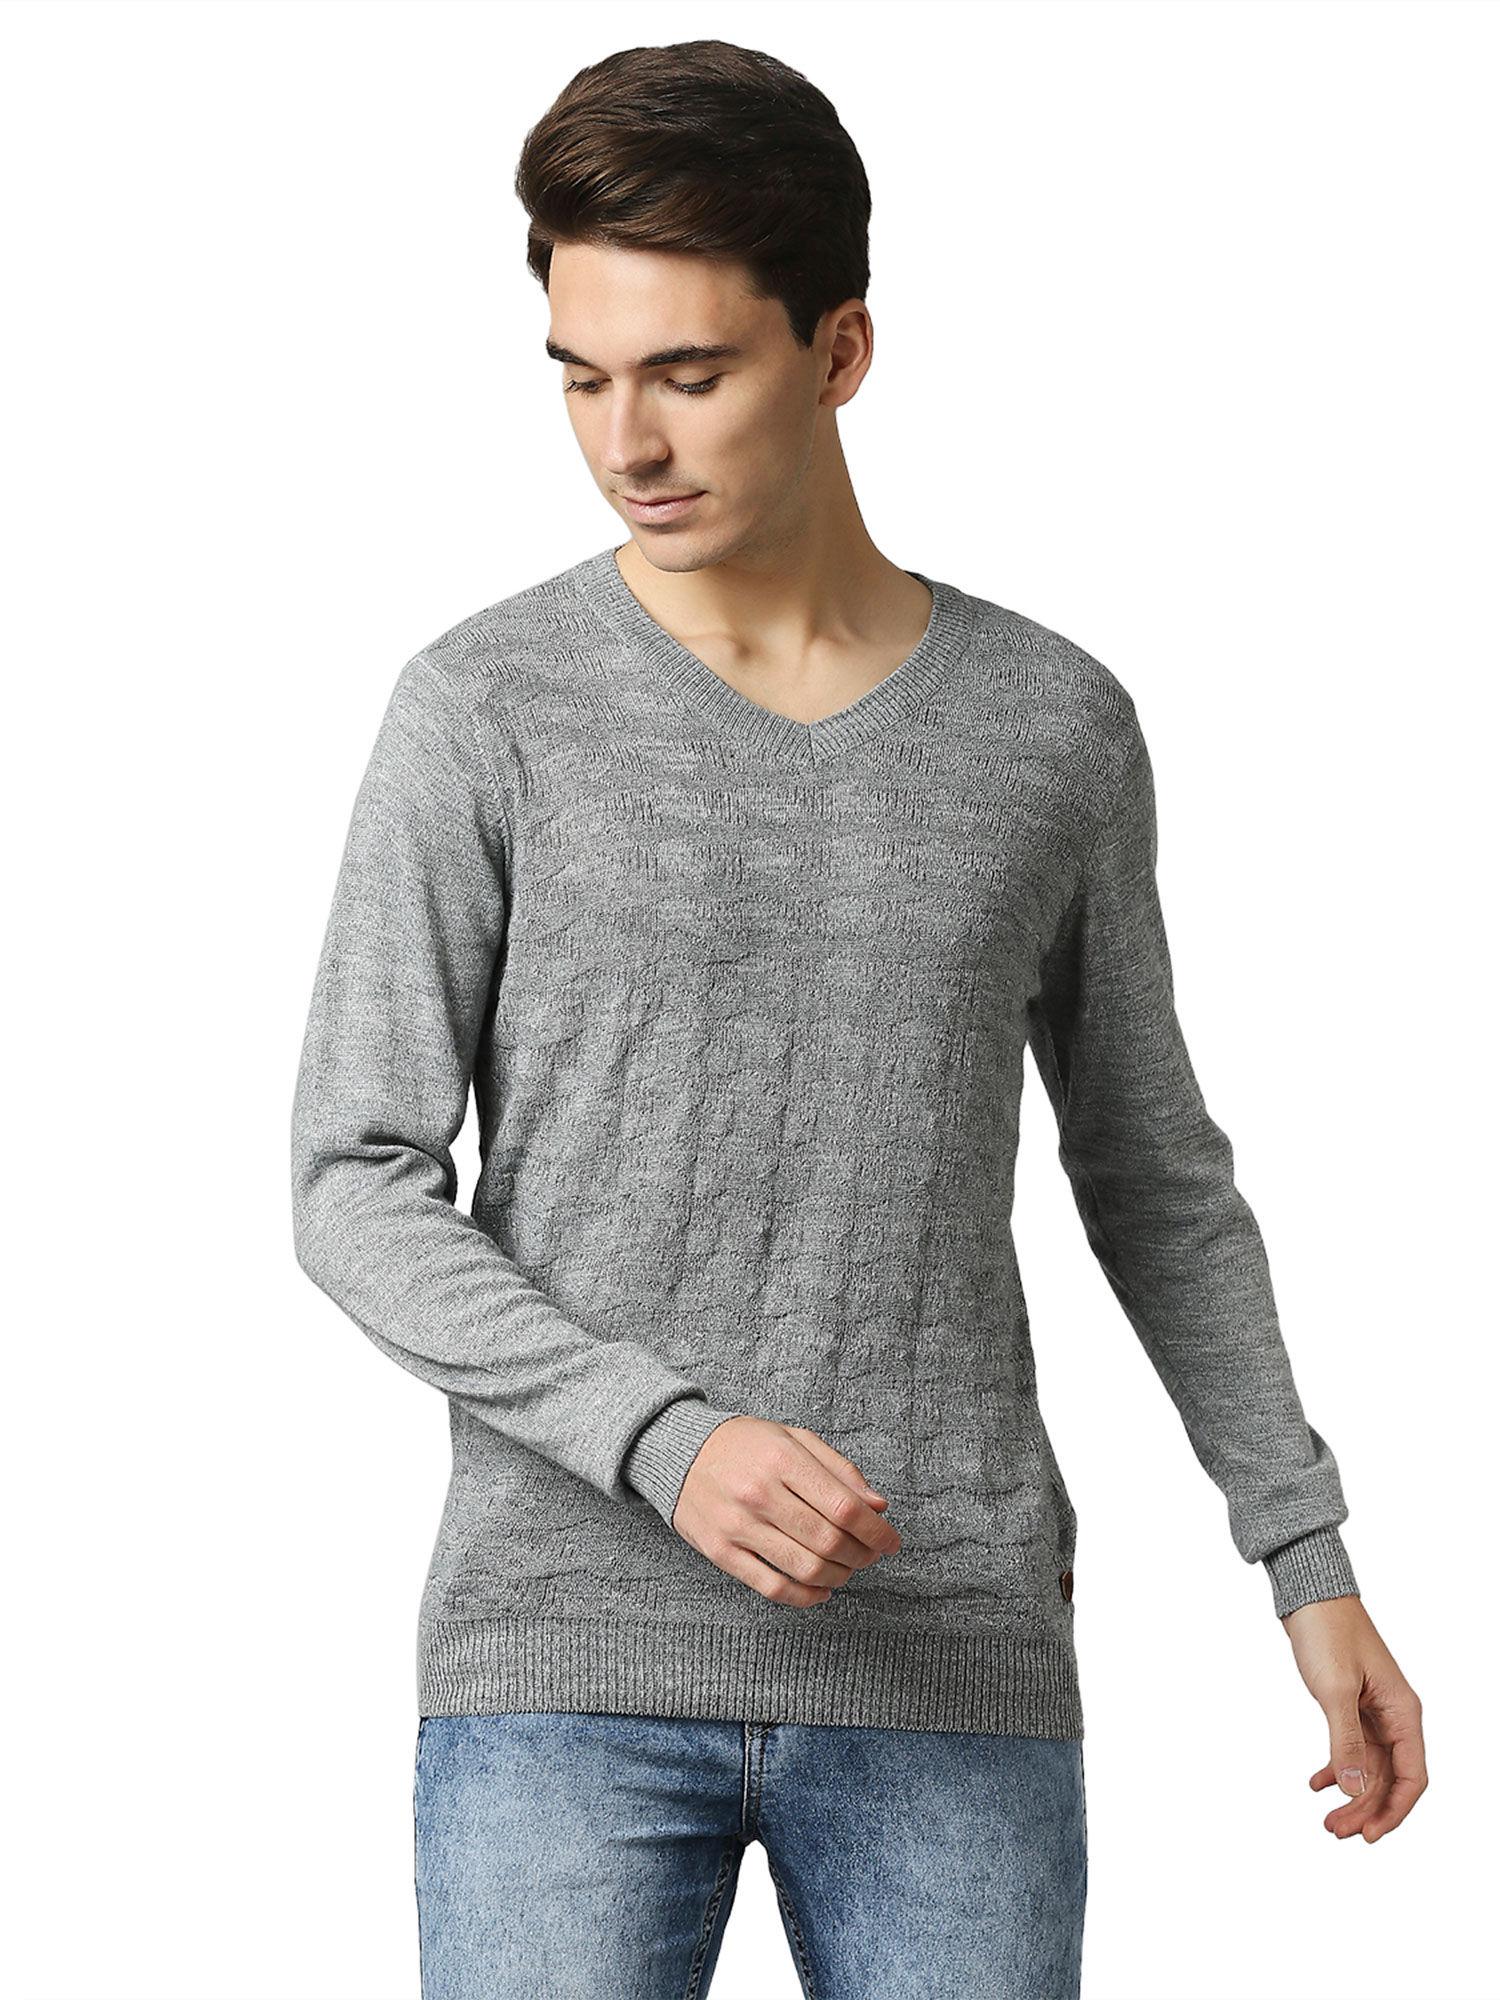 medium grey sweater